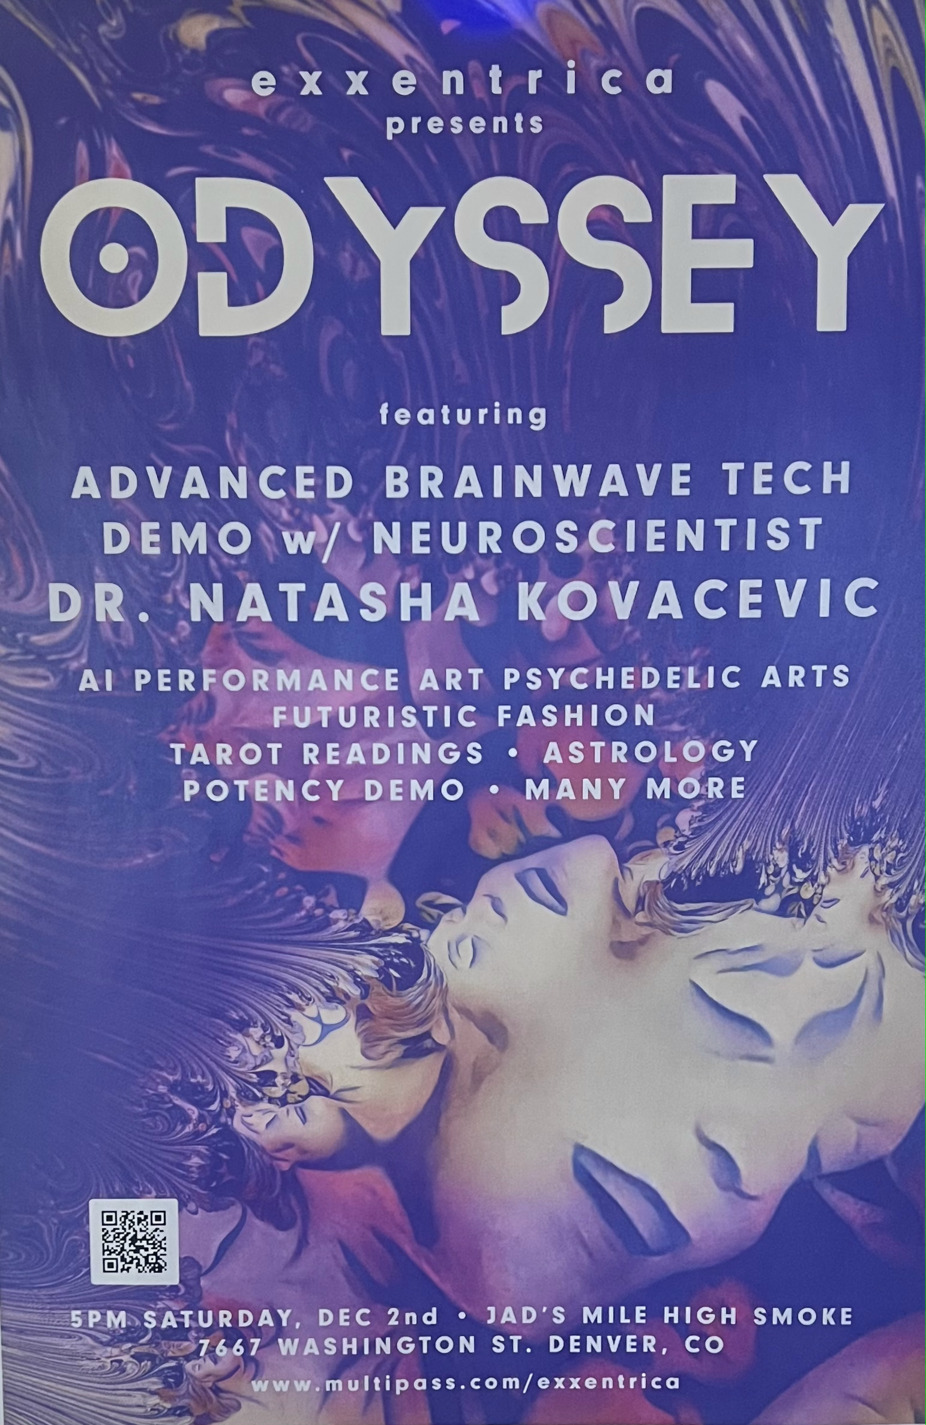 Exxentrica presents Odyssey event photo